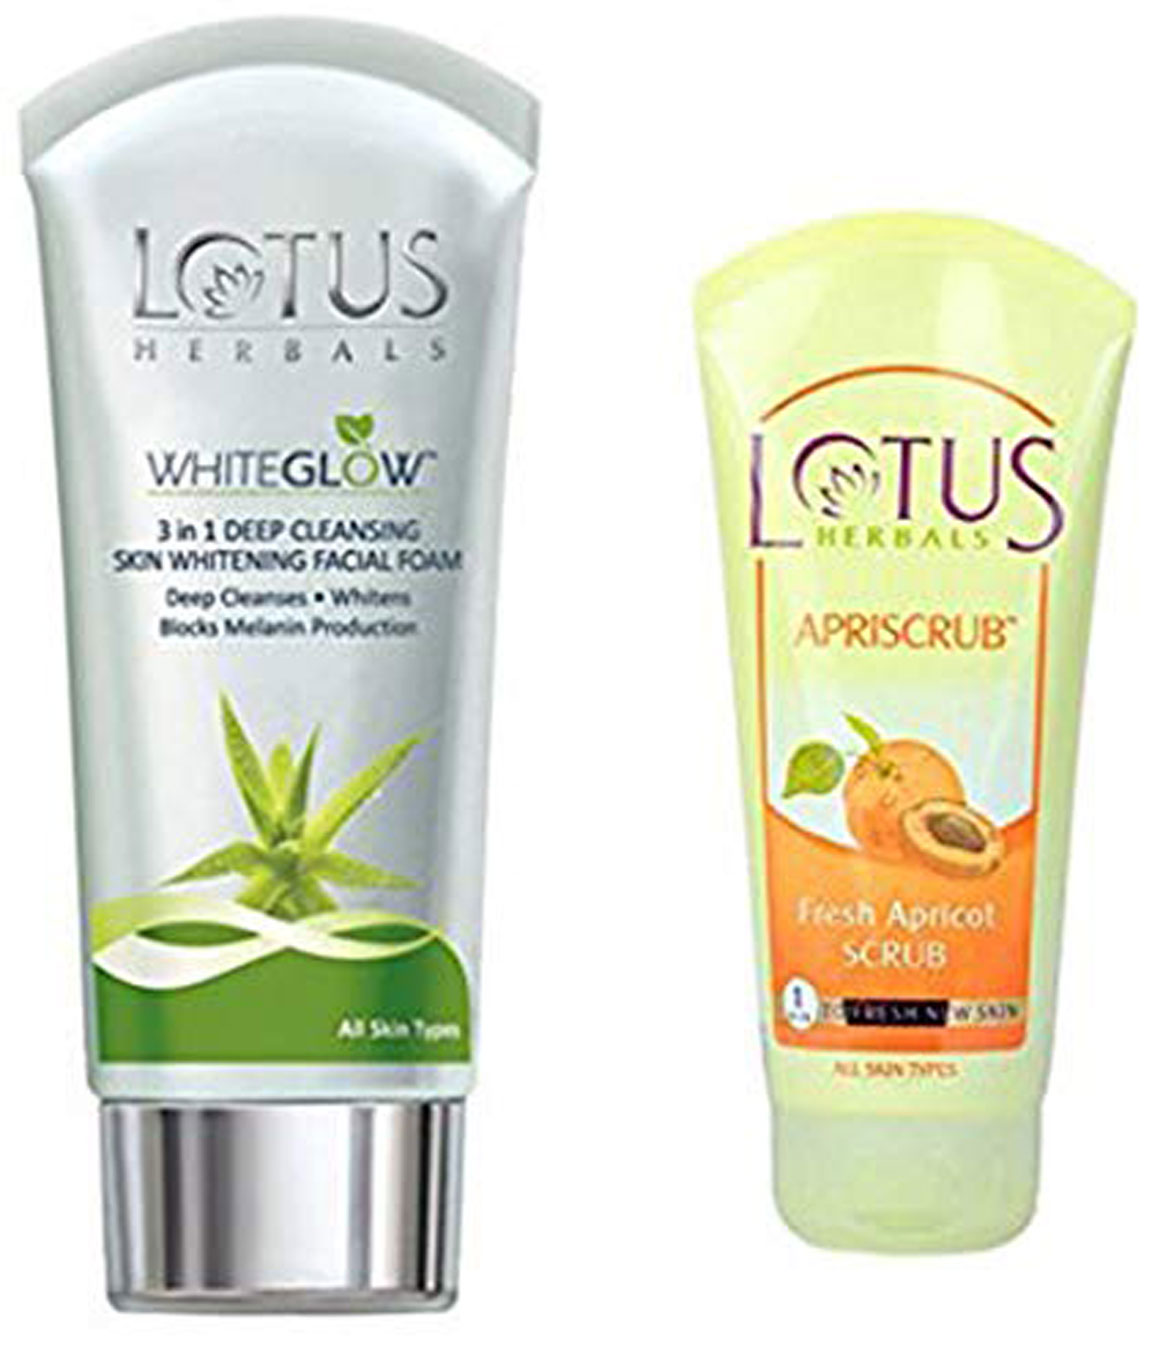 Lotus Herbals Whiteglow 3-In-1 Deep Cleansing Skin Whitening Facial Foam, 100gm and Lotus Herbals Apriscrub Fresh Apricot Scrub, 180gm